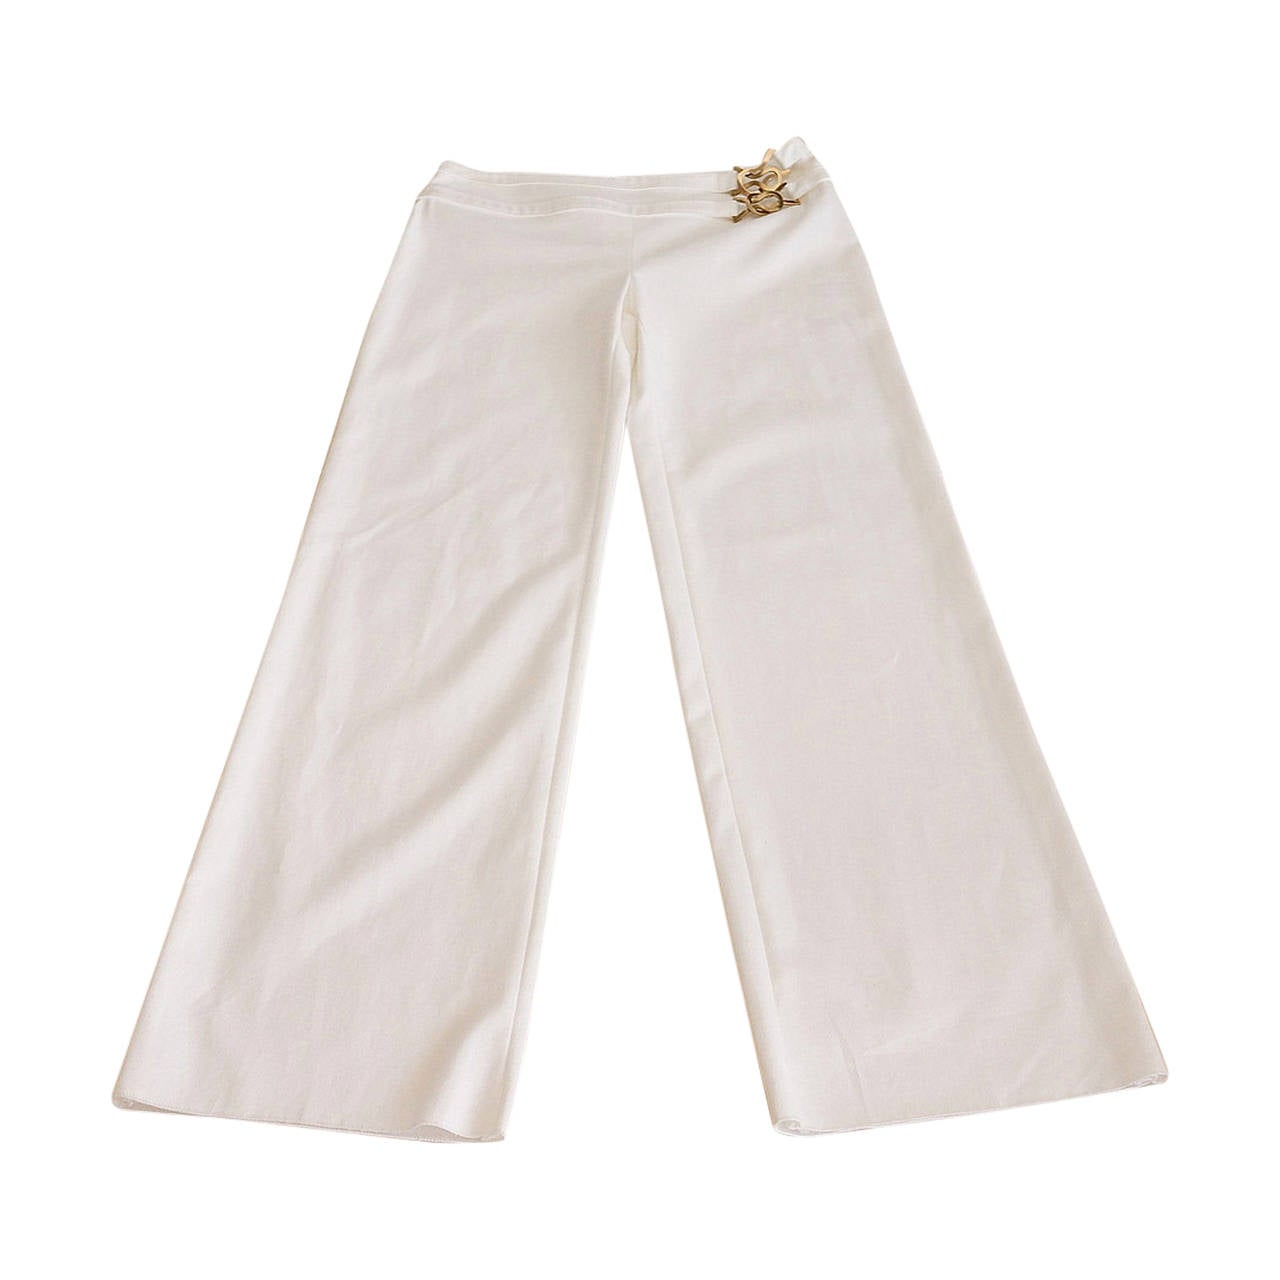 VALENTINO pant white hardware detail 8 NWT full leg wearable classic